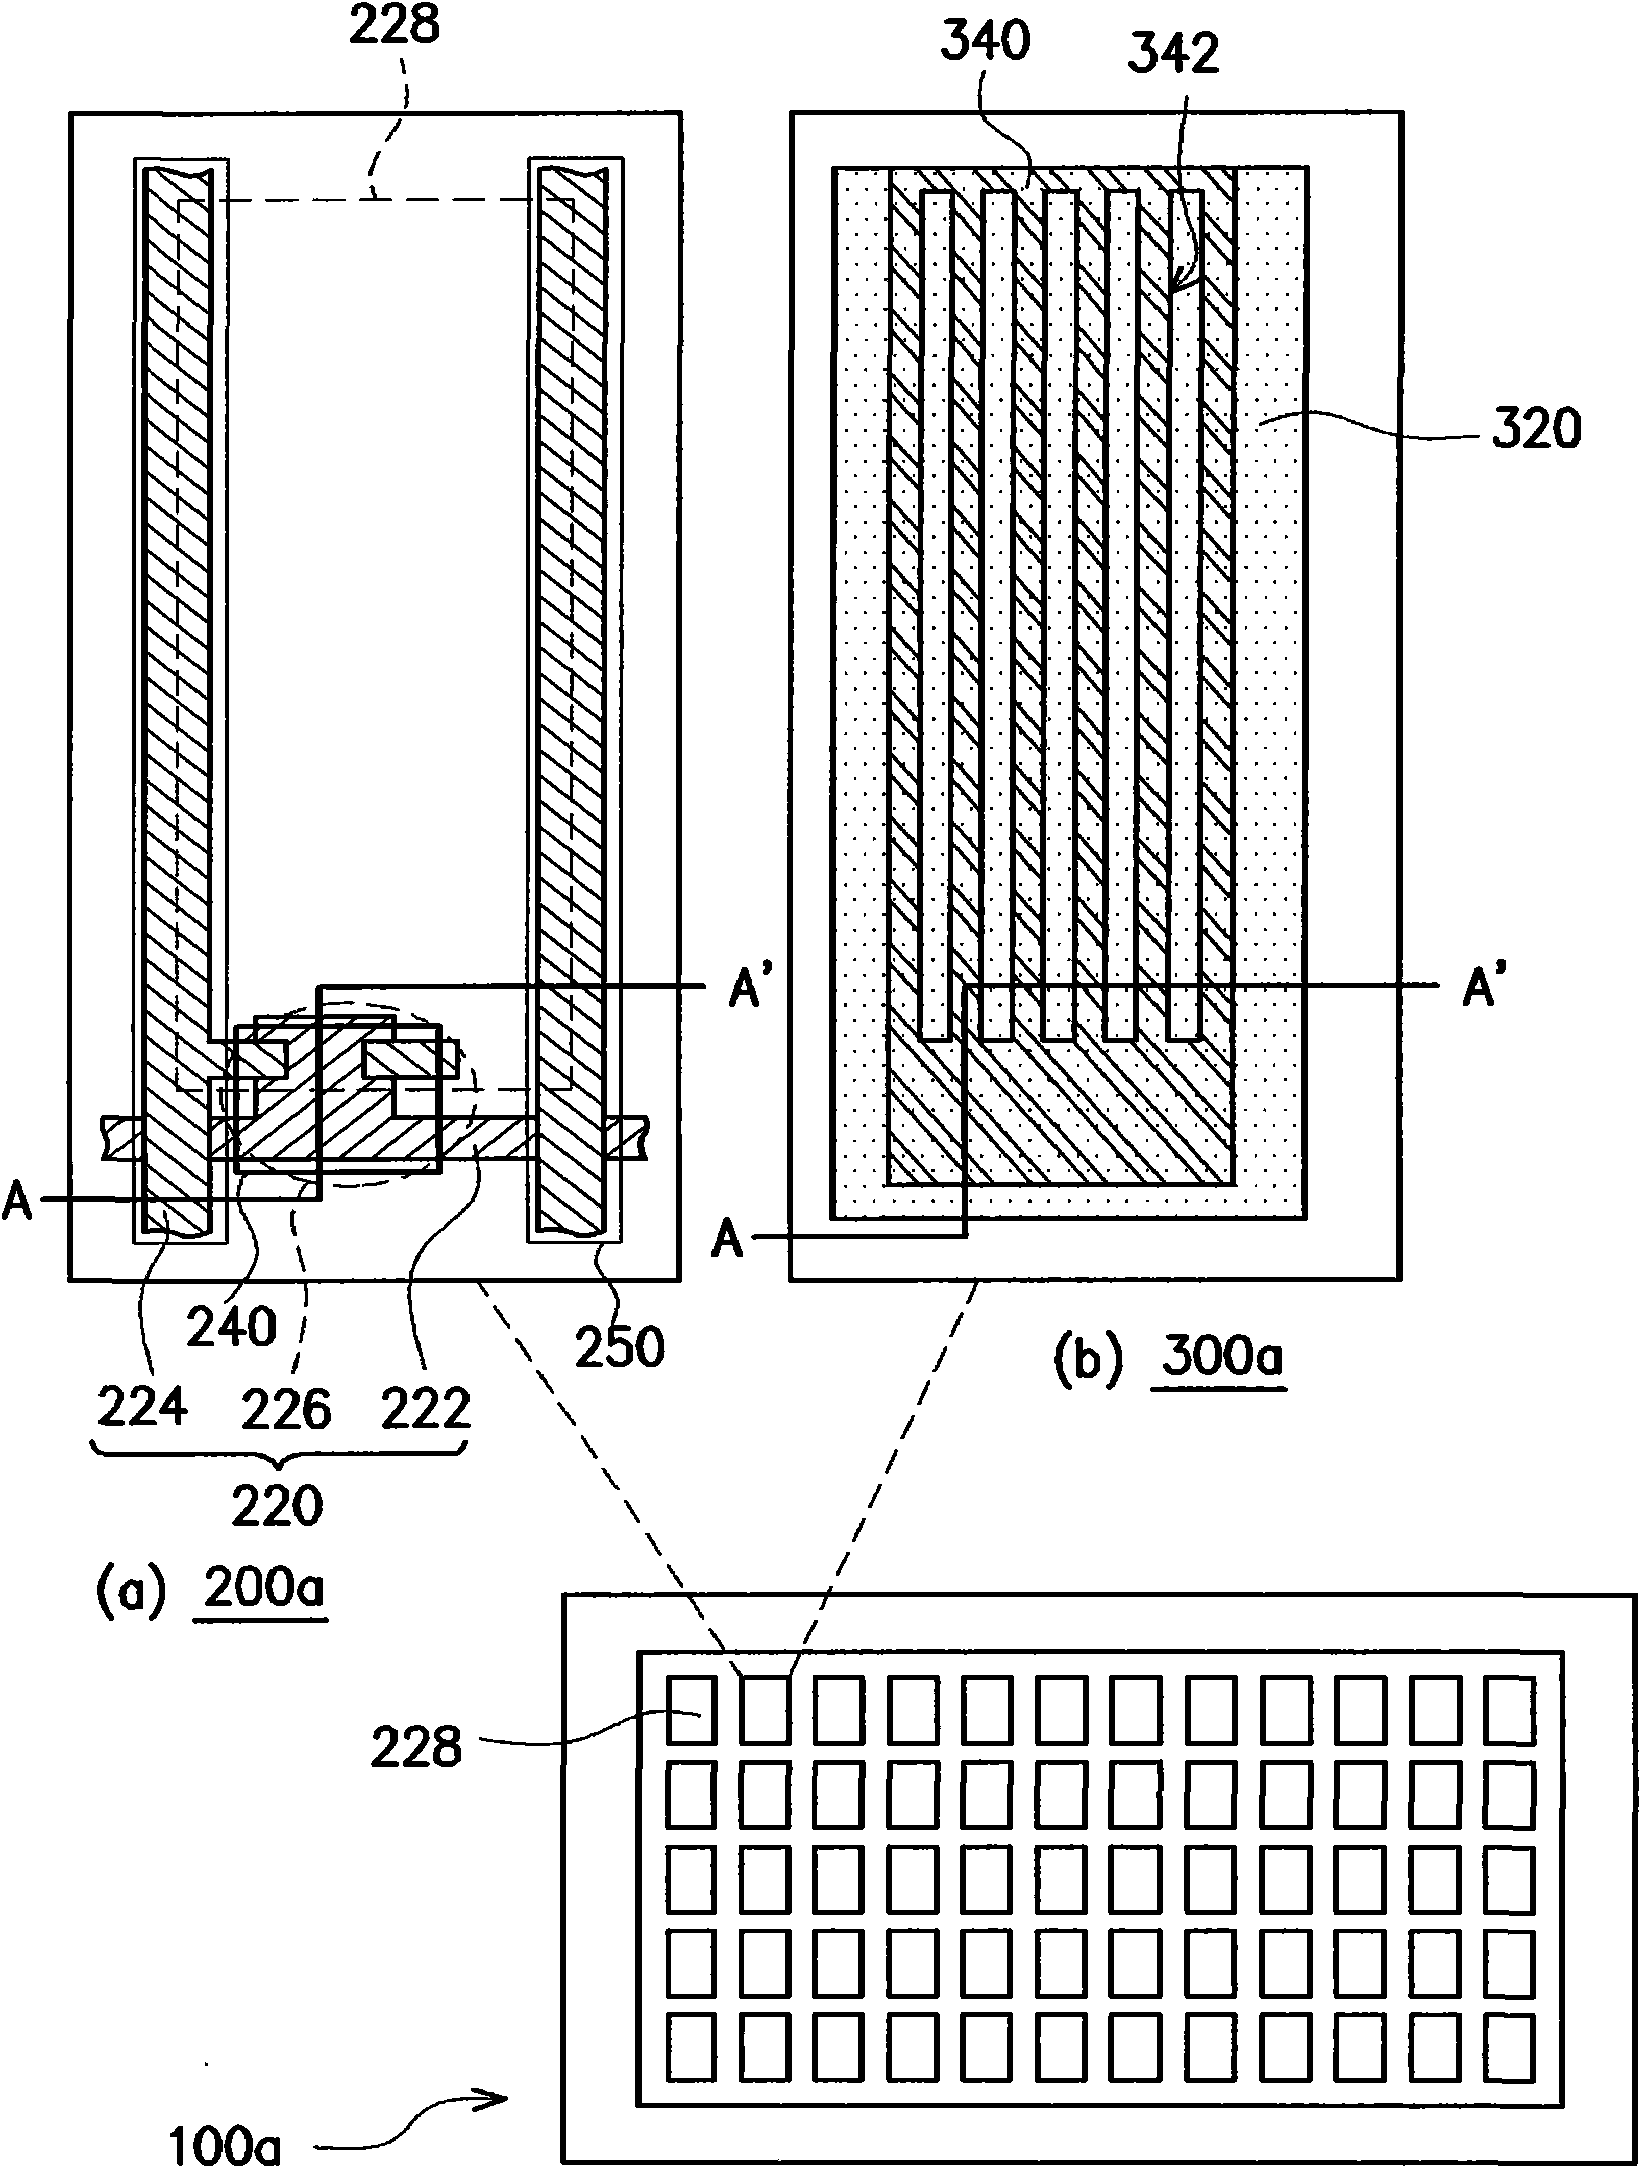 LCD (liquid crystal display) panel